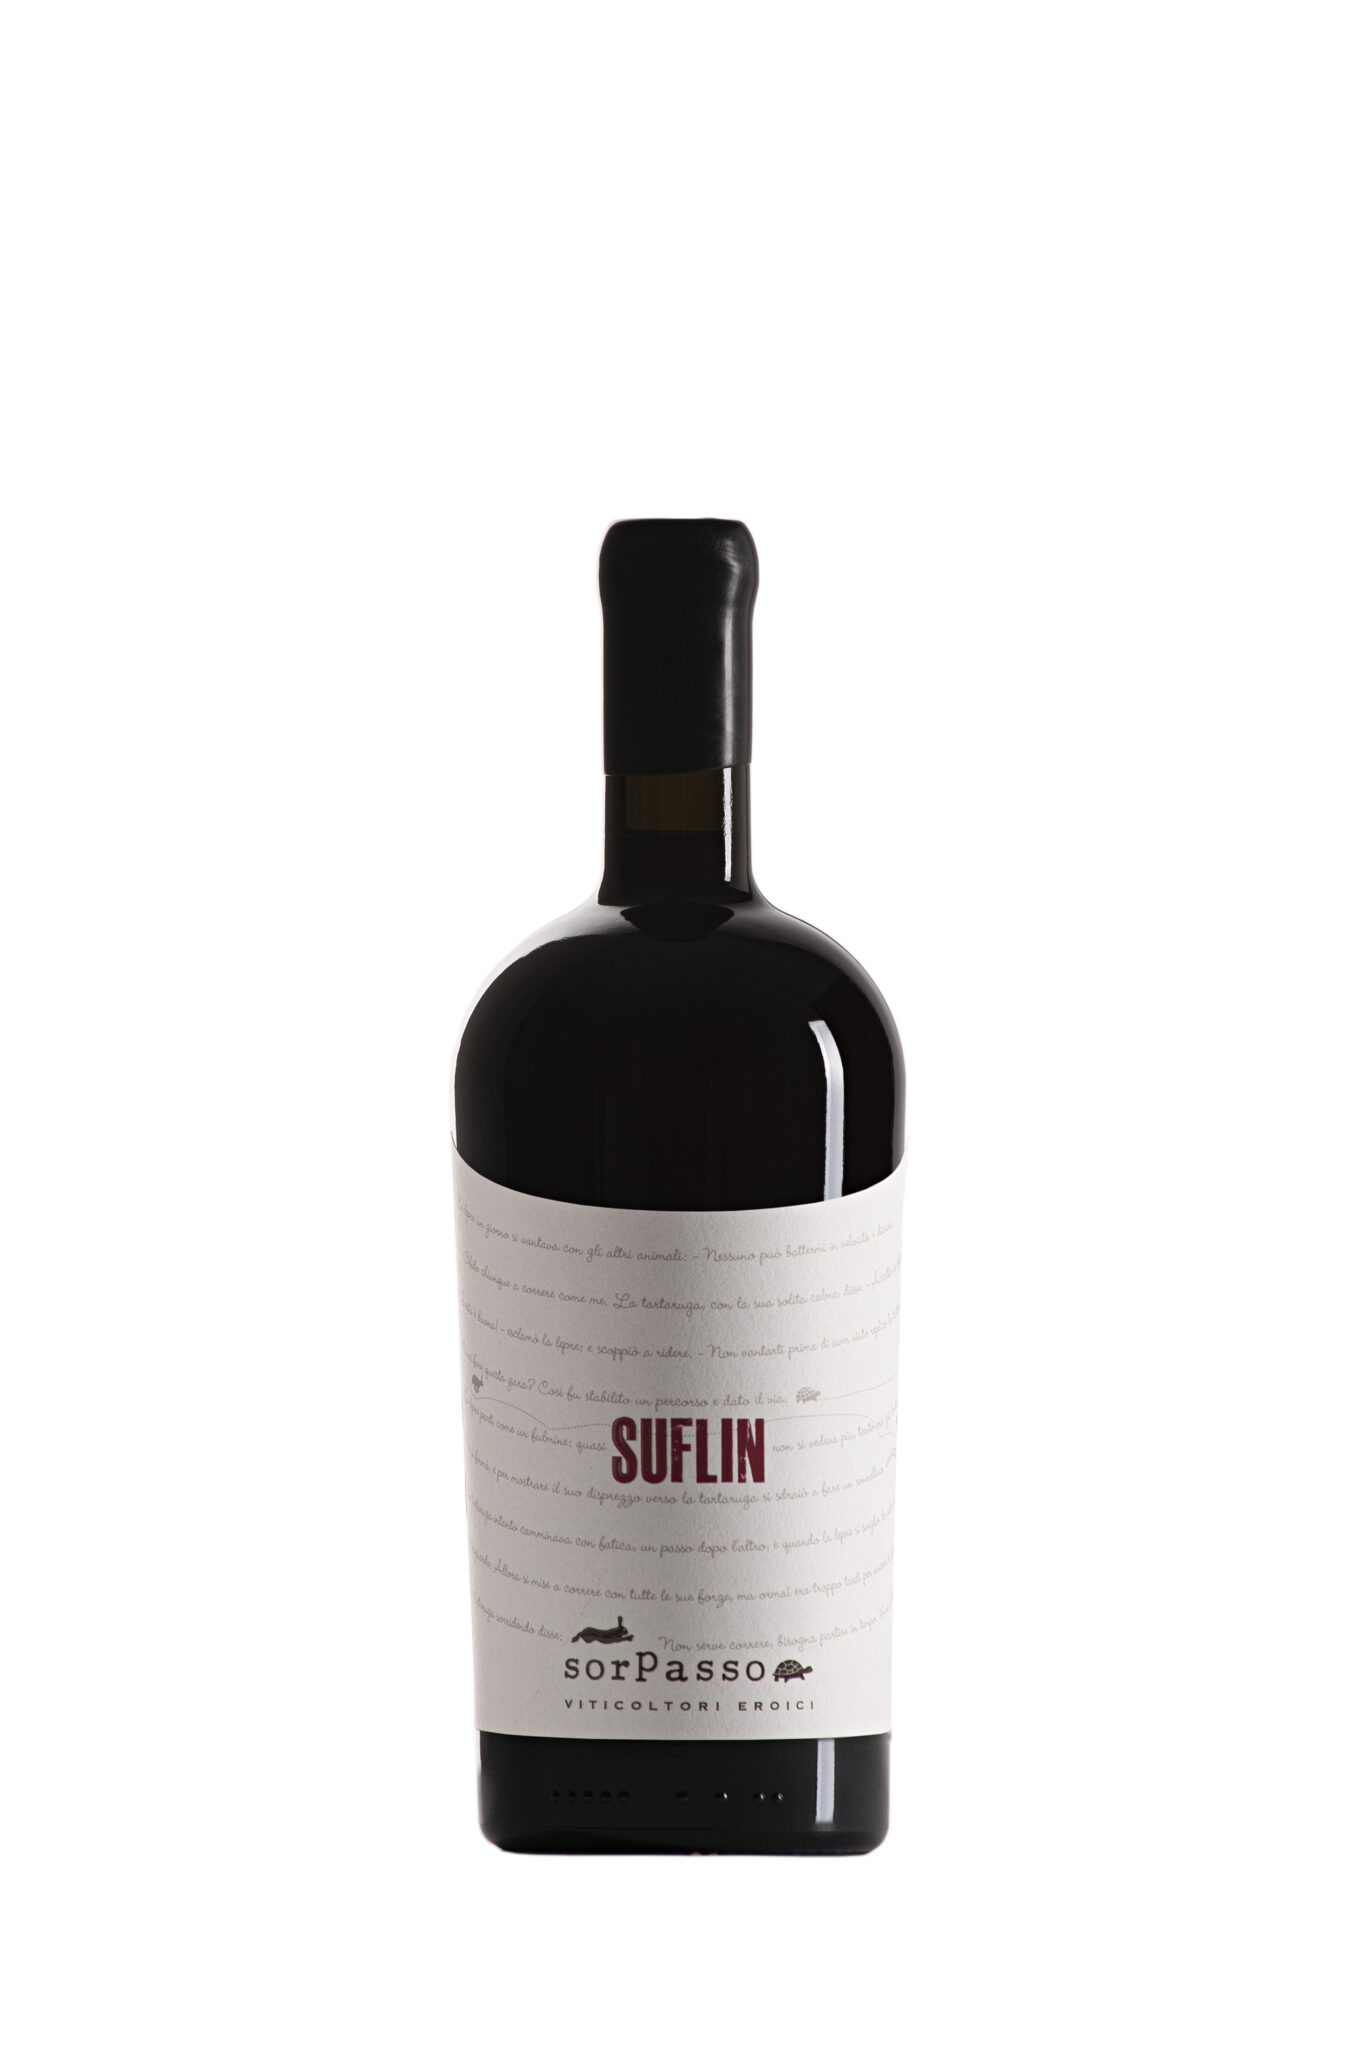 Sorpasso - vino Suflin